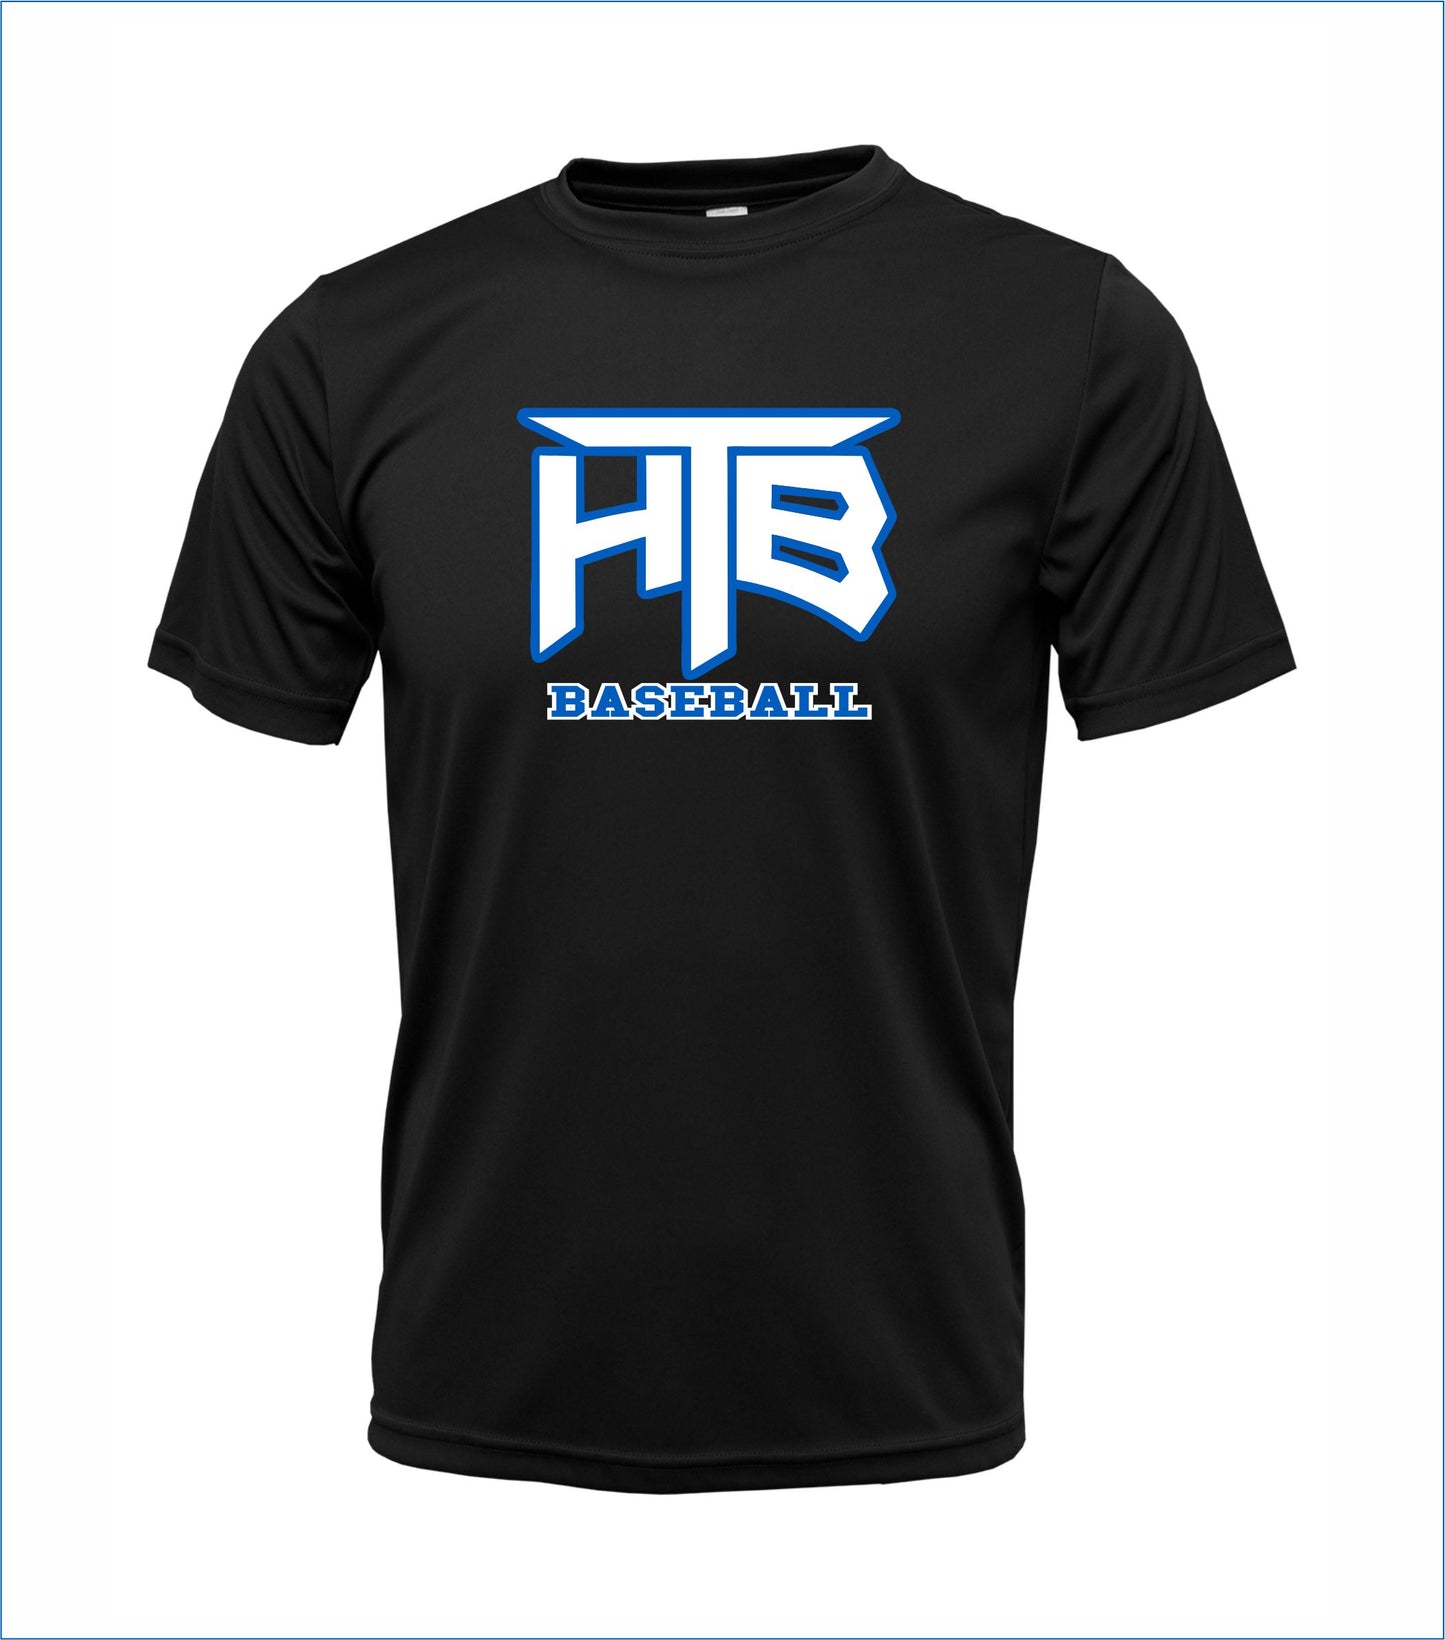 HTB Baseball Short Sleeve Dri-Fit T-Shirt